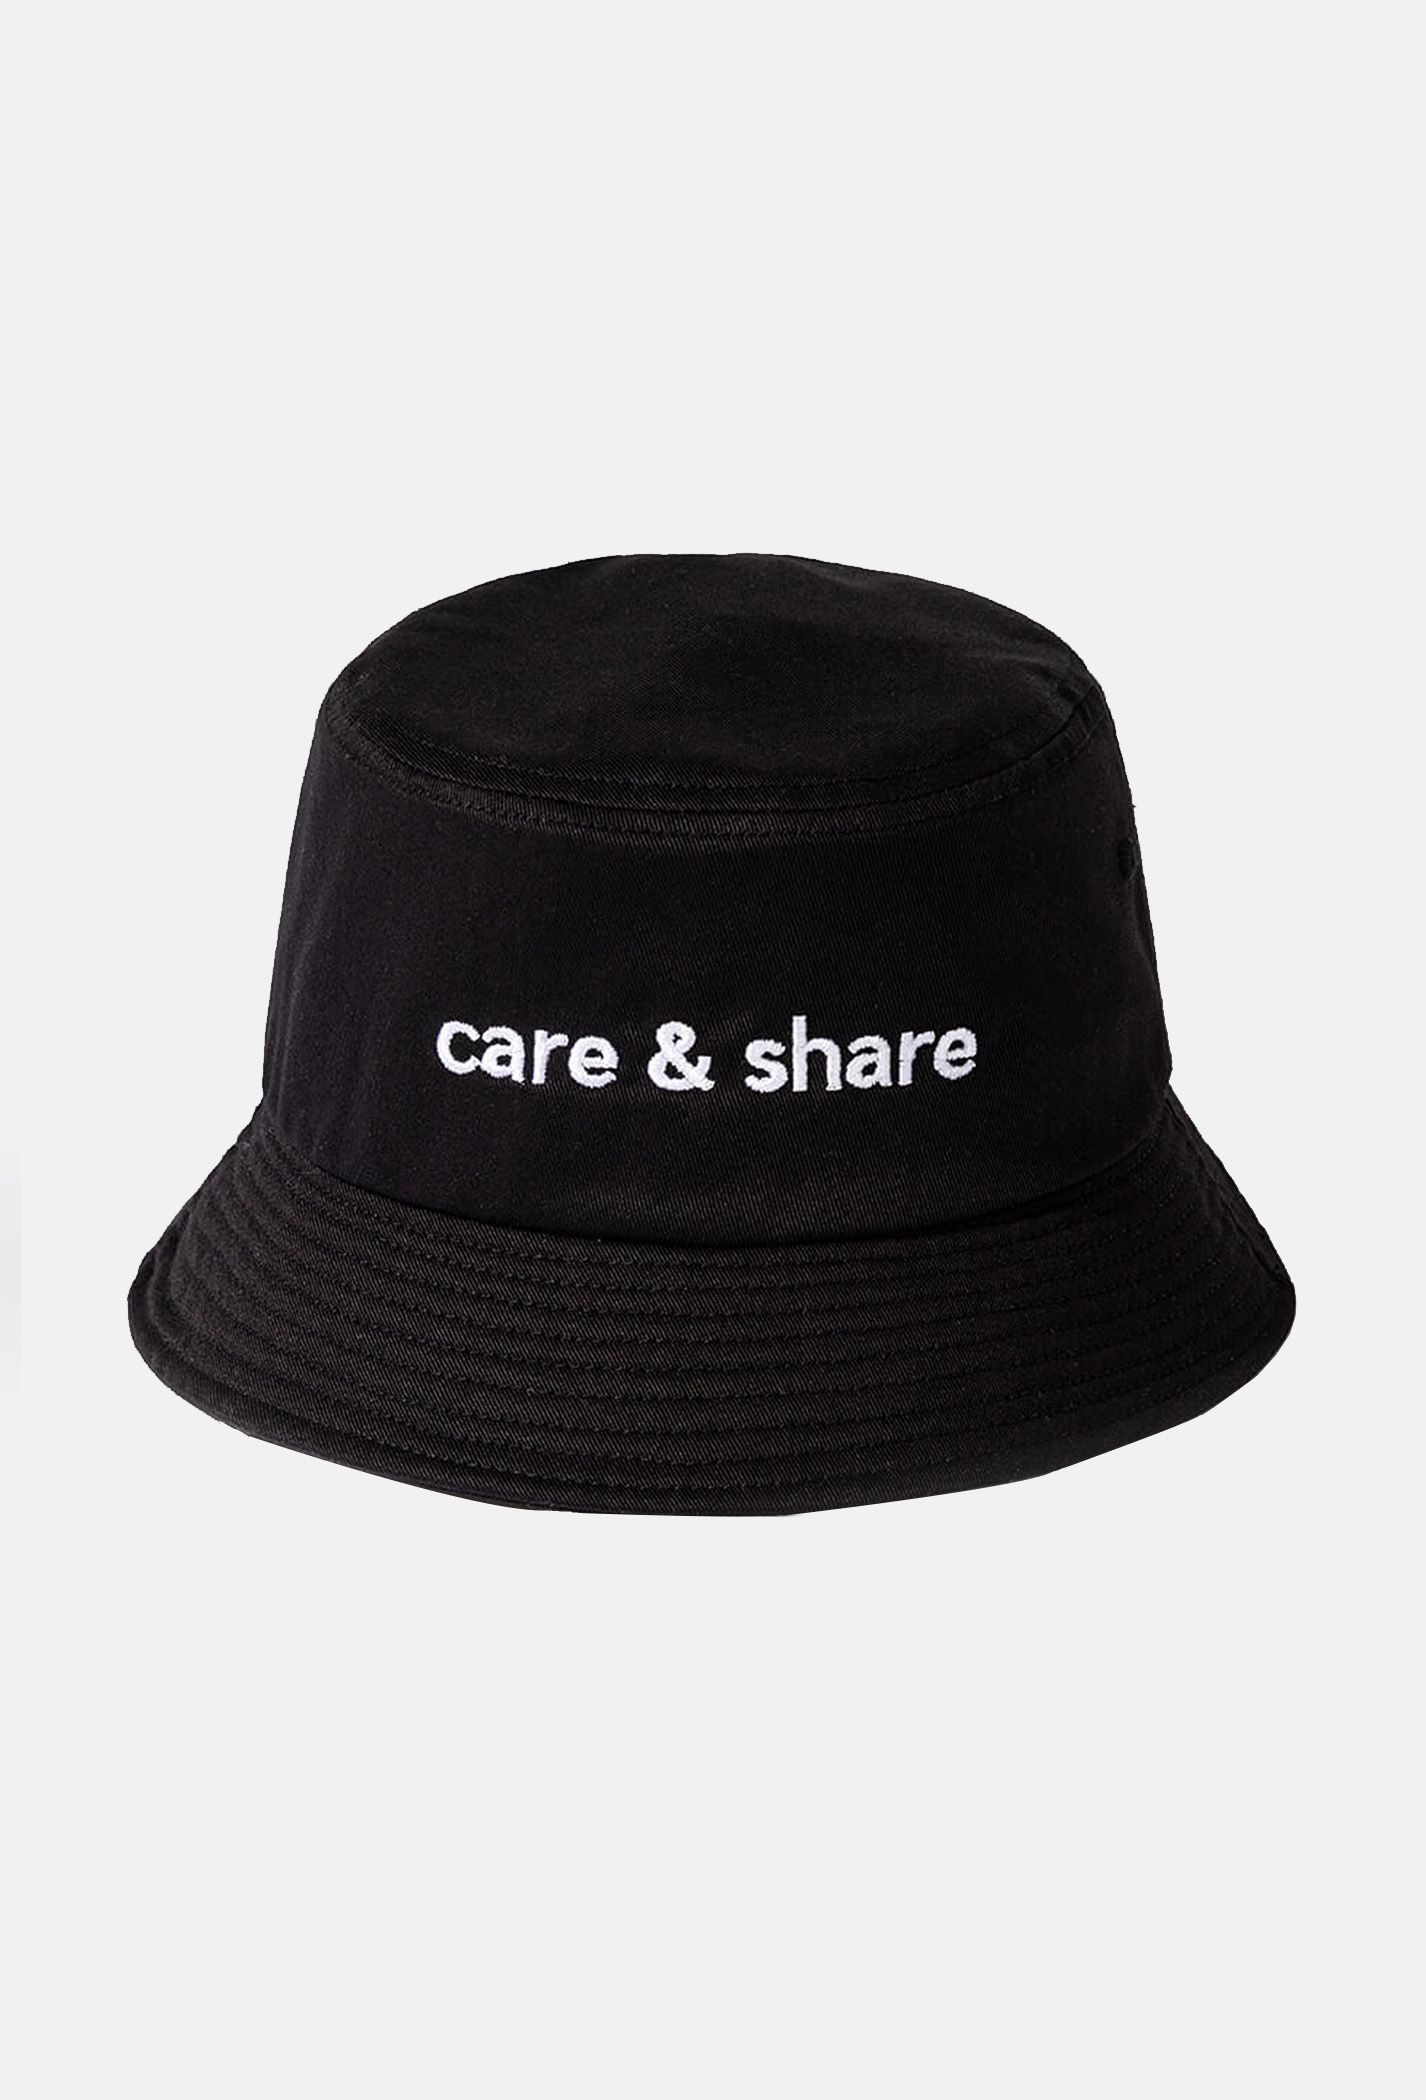 Mũ Bucket Hat thêu Care & Share Typo Đen